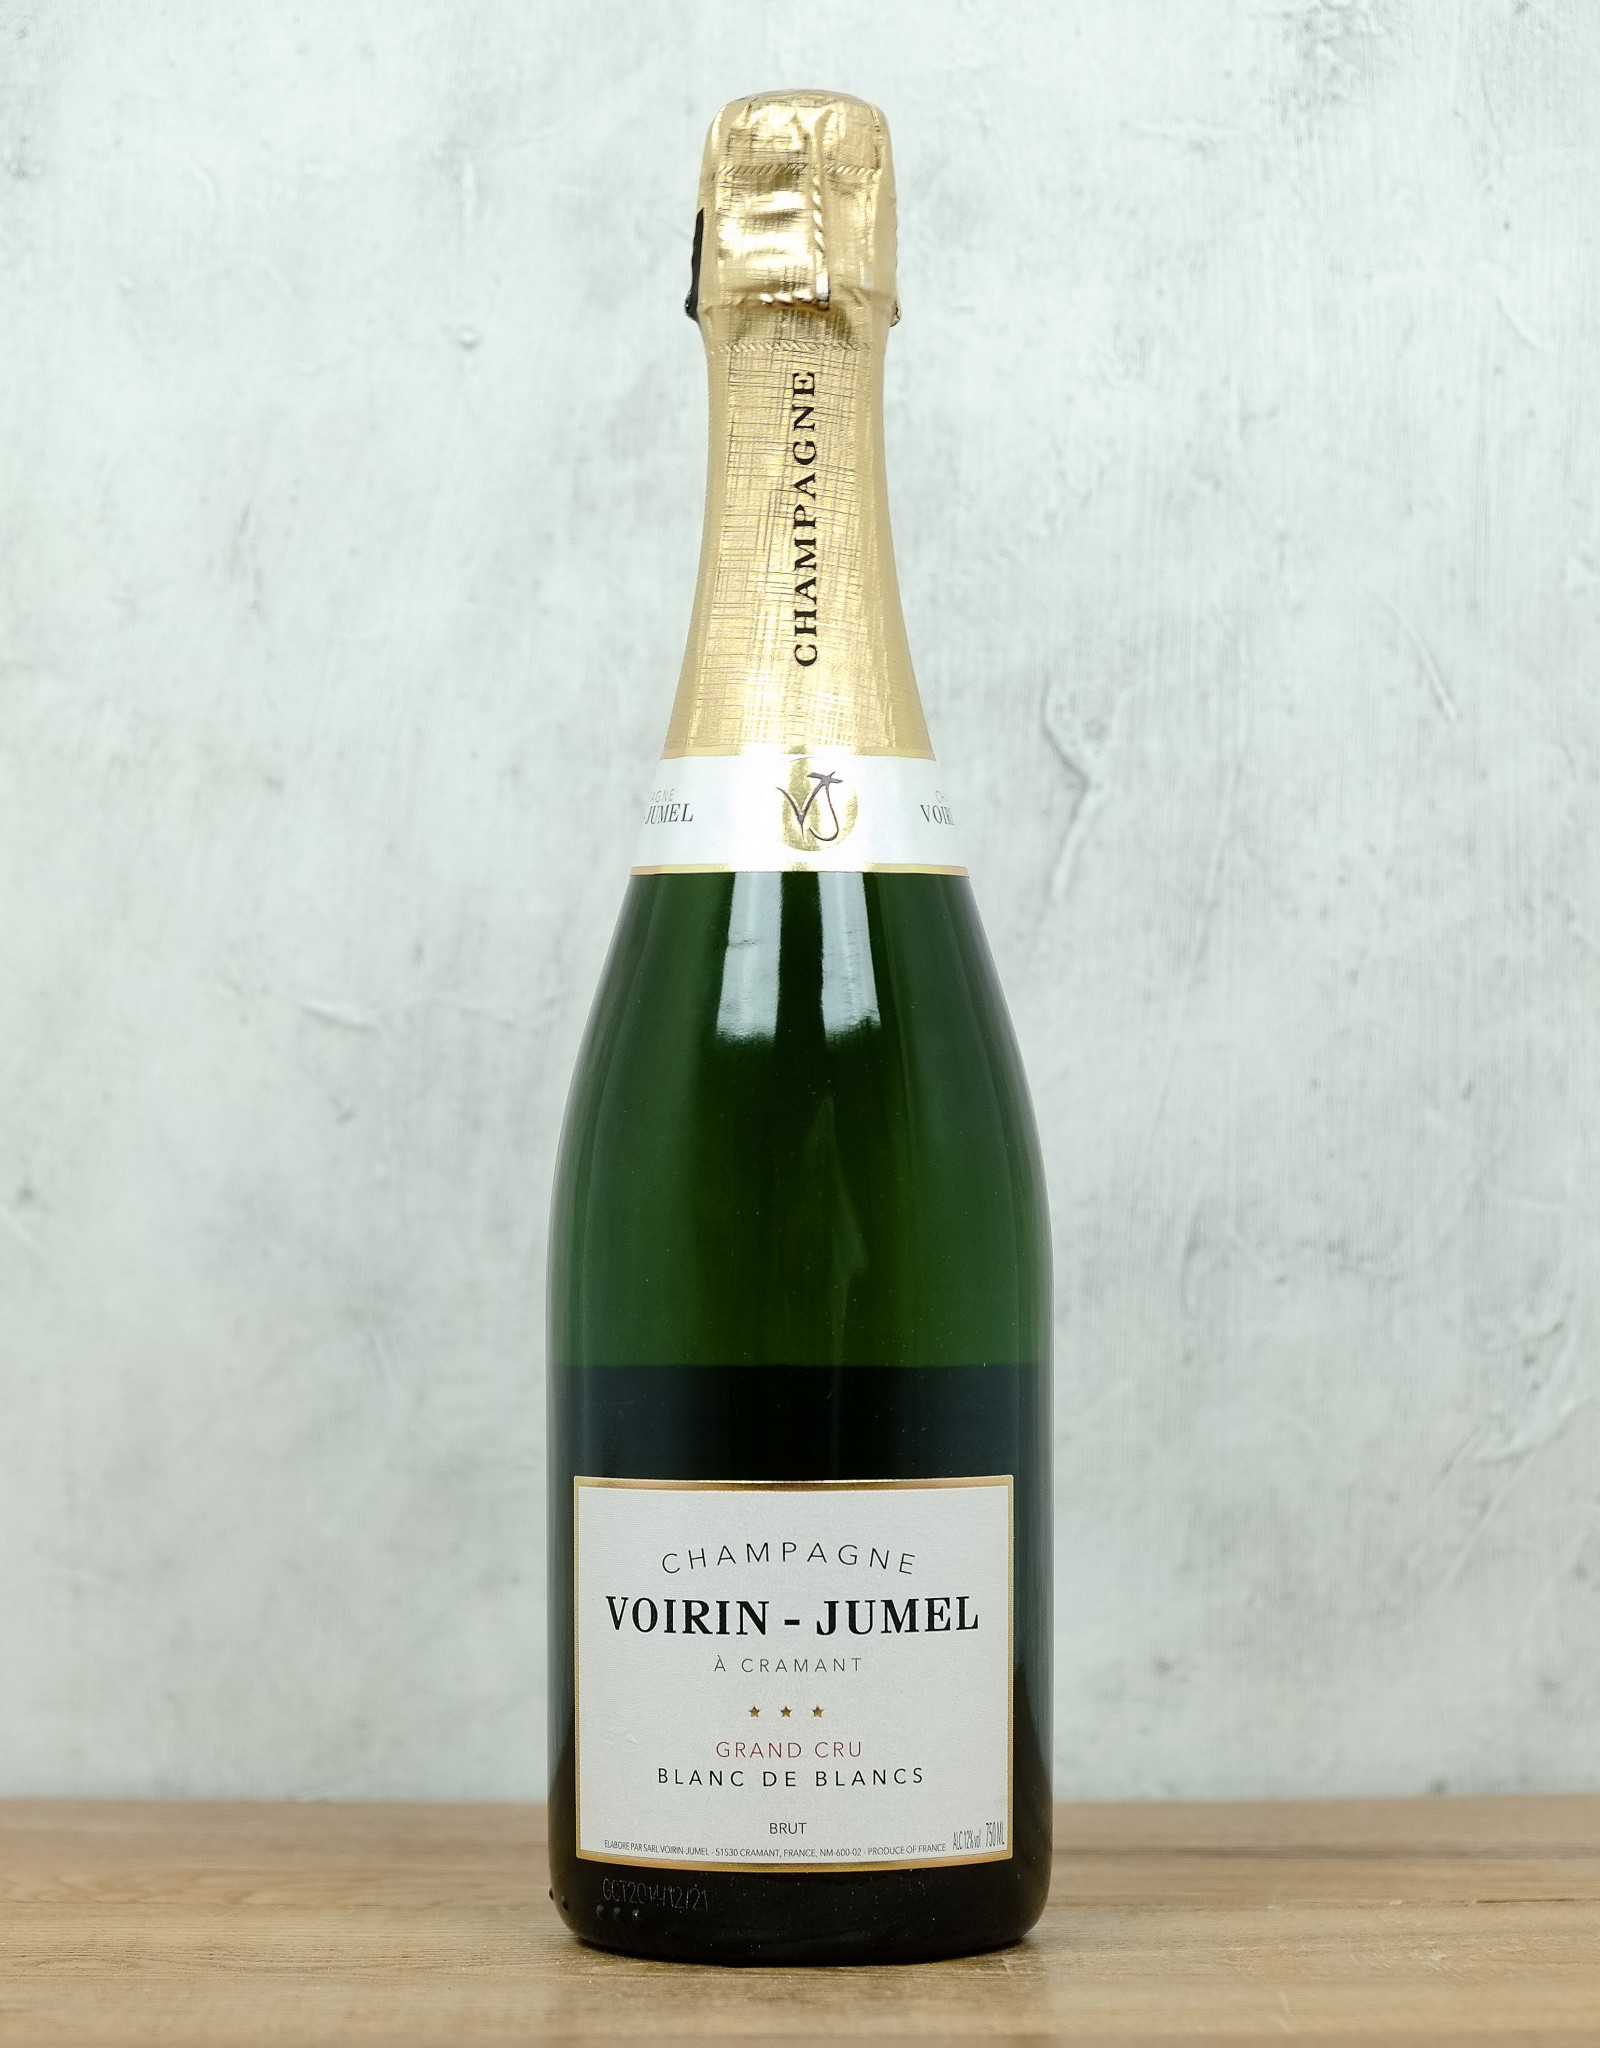 Champagne Voirin-Jumel Blan de Blancs Brut